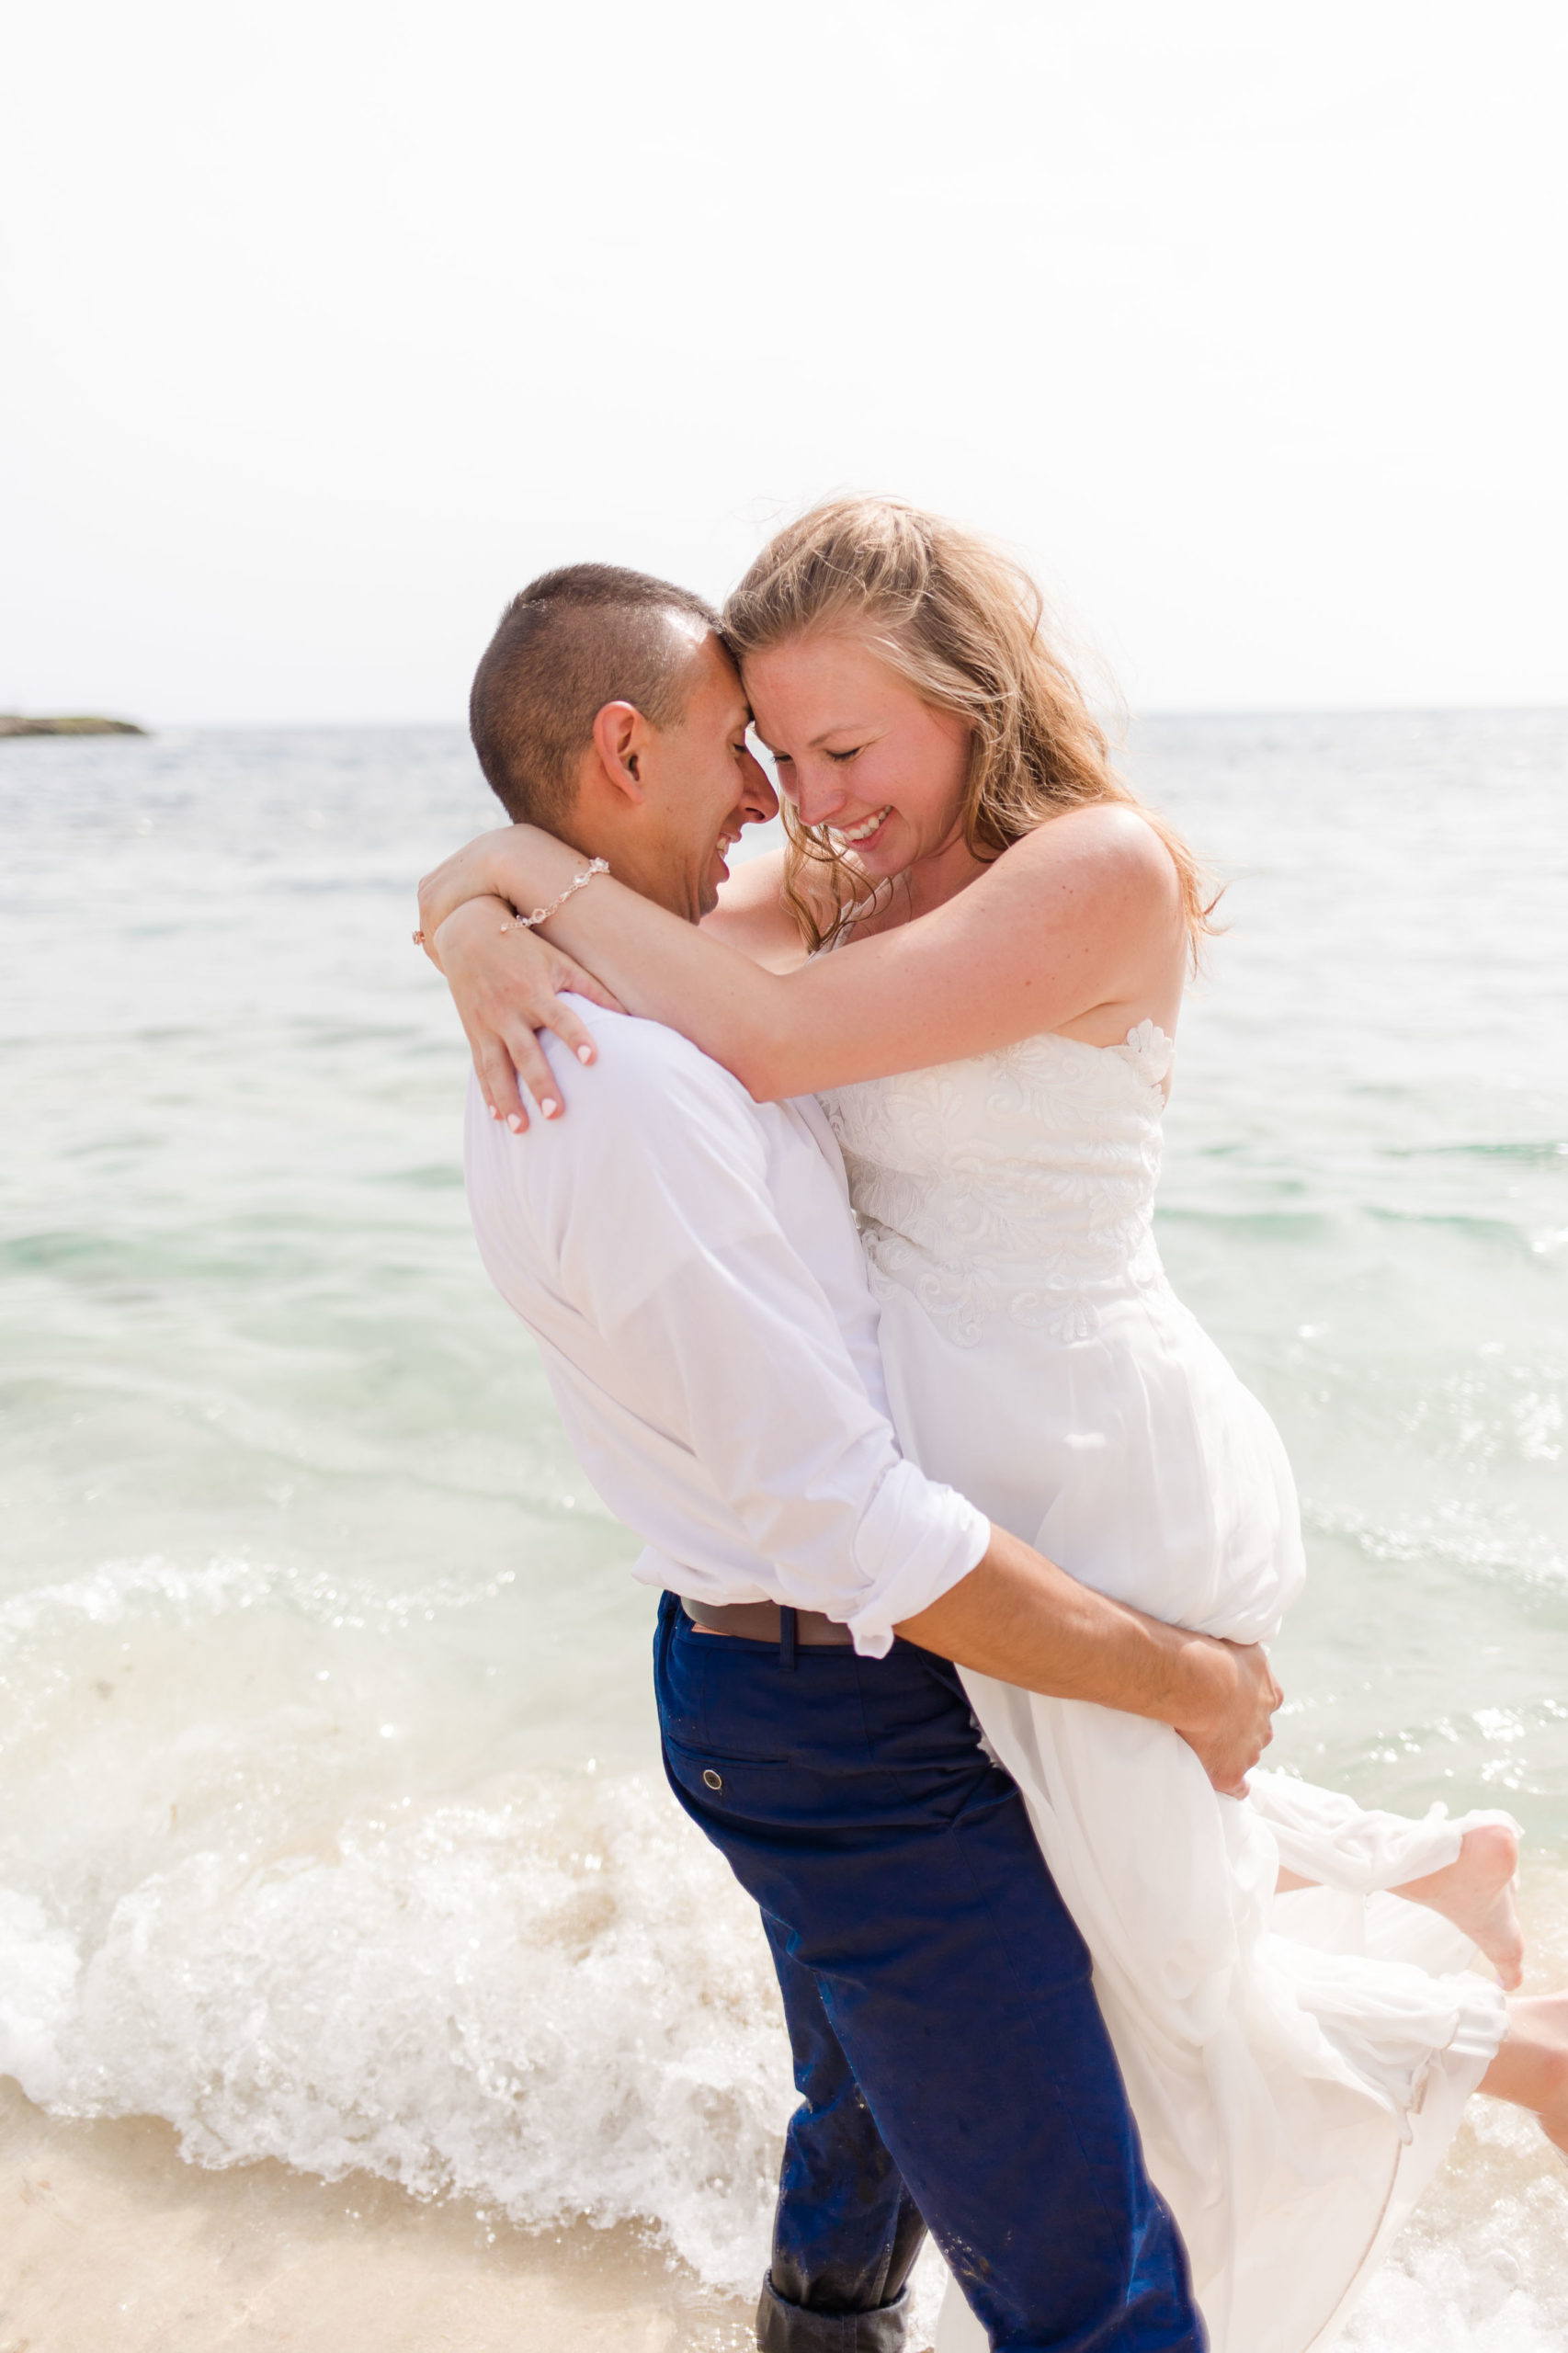 Groom And Groomsmen Attire For Your Beach Wedding Destination Wedding Tips 9028